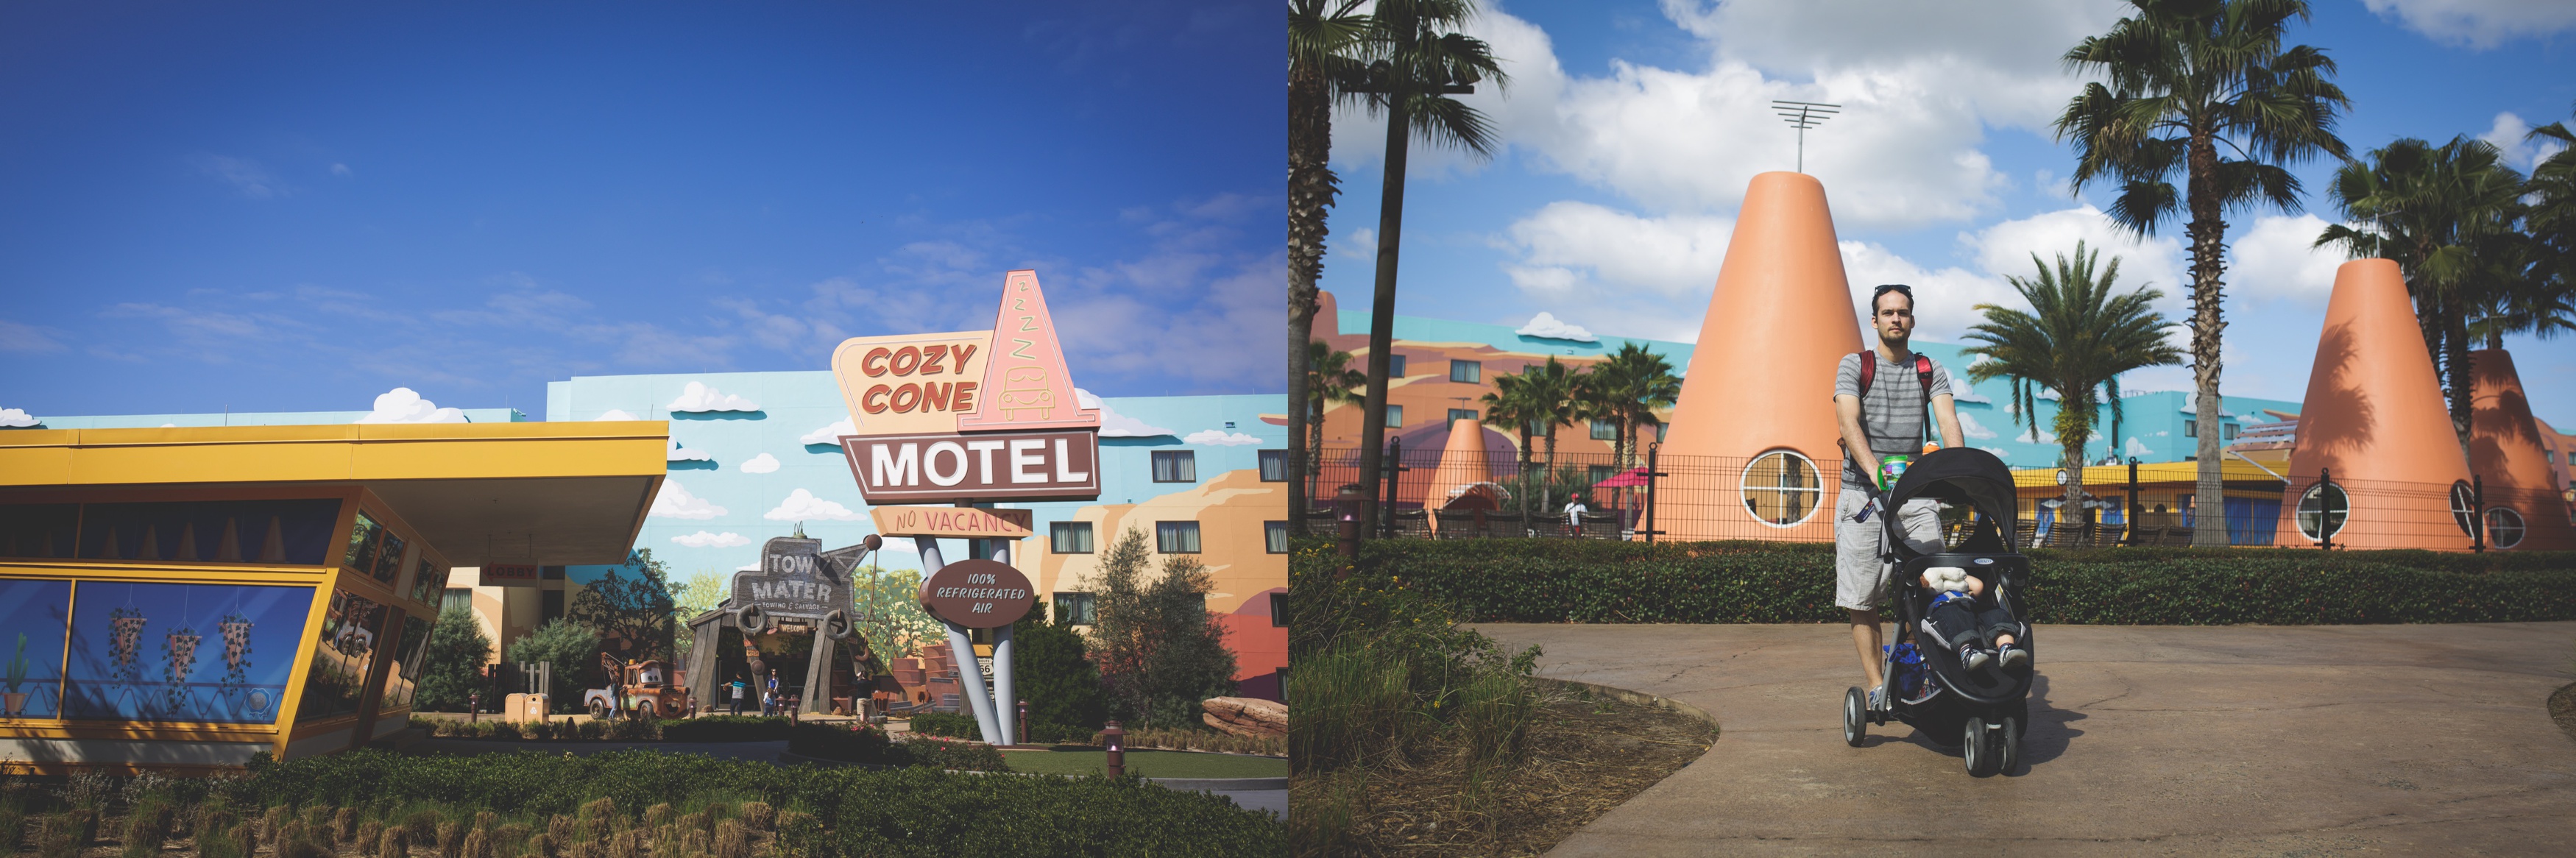 Walt Disney World Resorts, Value Resorts, Moderate Resorts, Deluxe Resorts, Staying on WDW Property